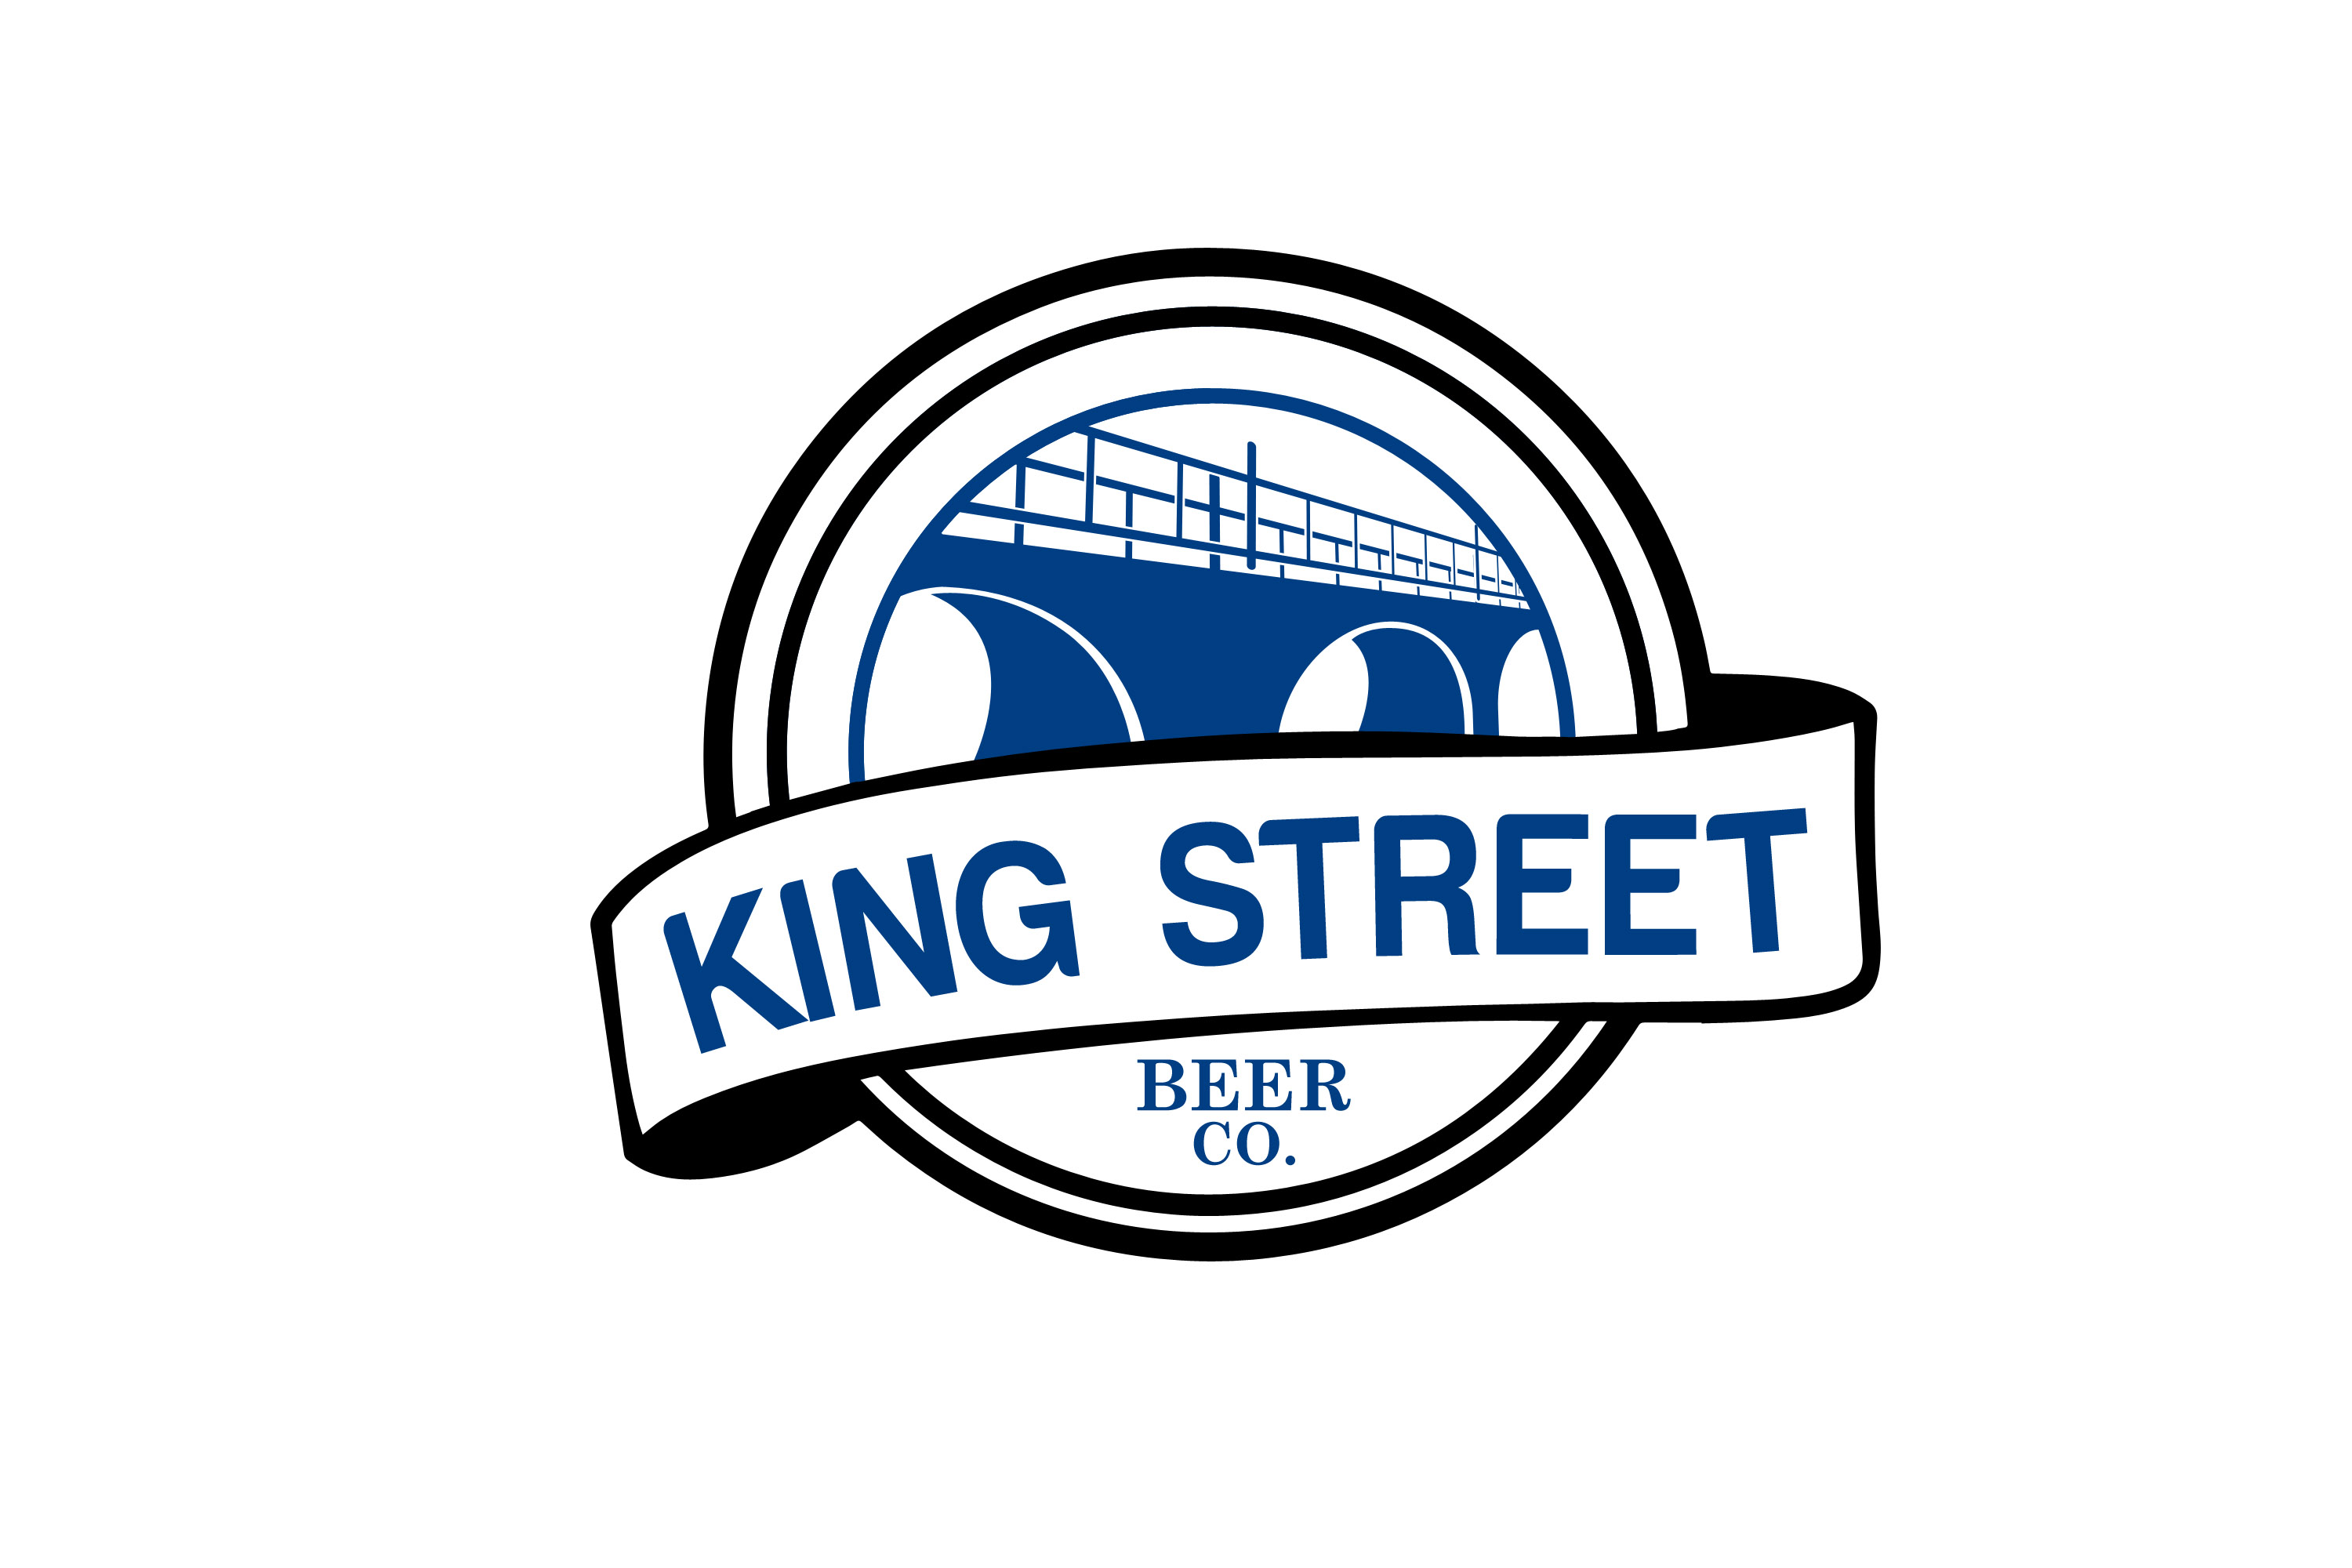 King Street Beer Company